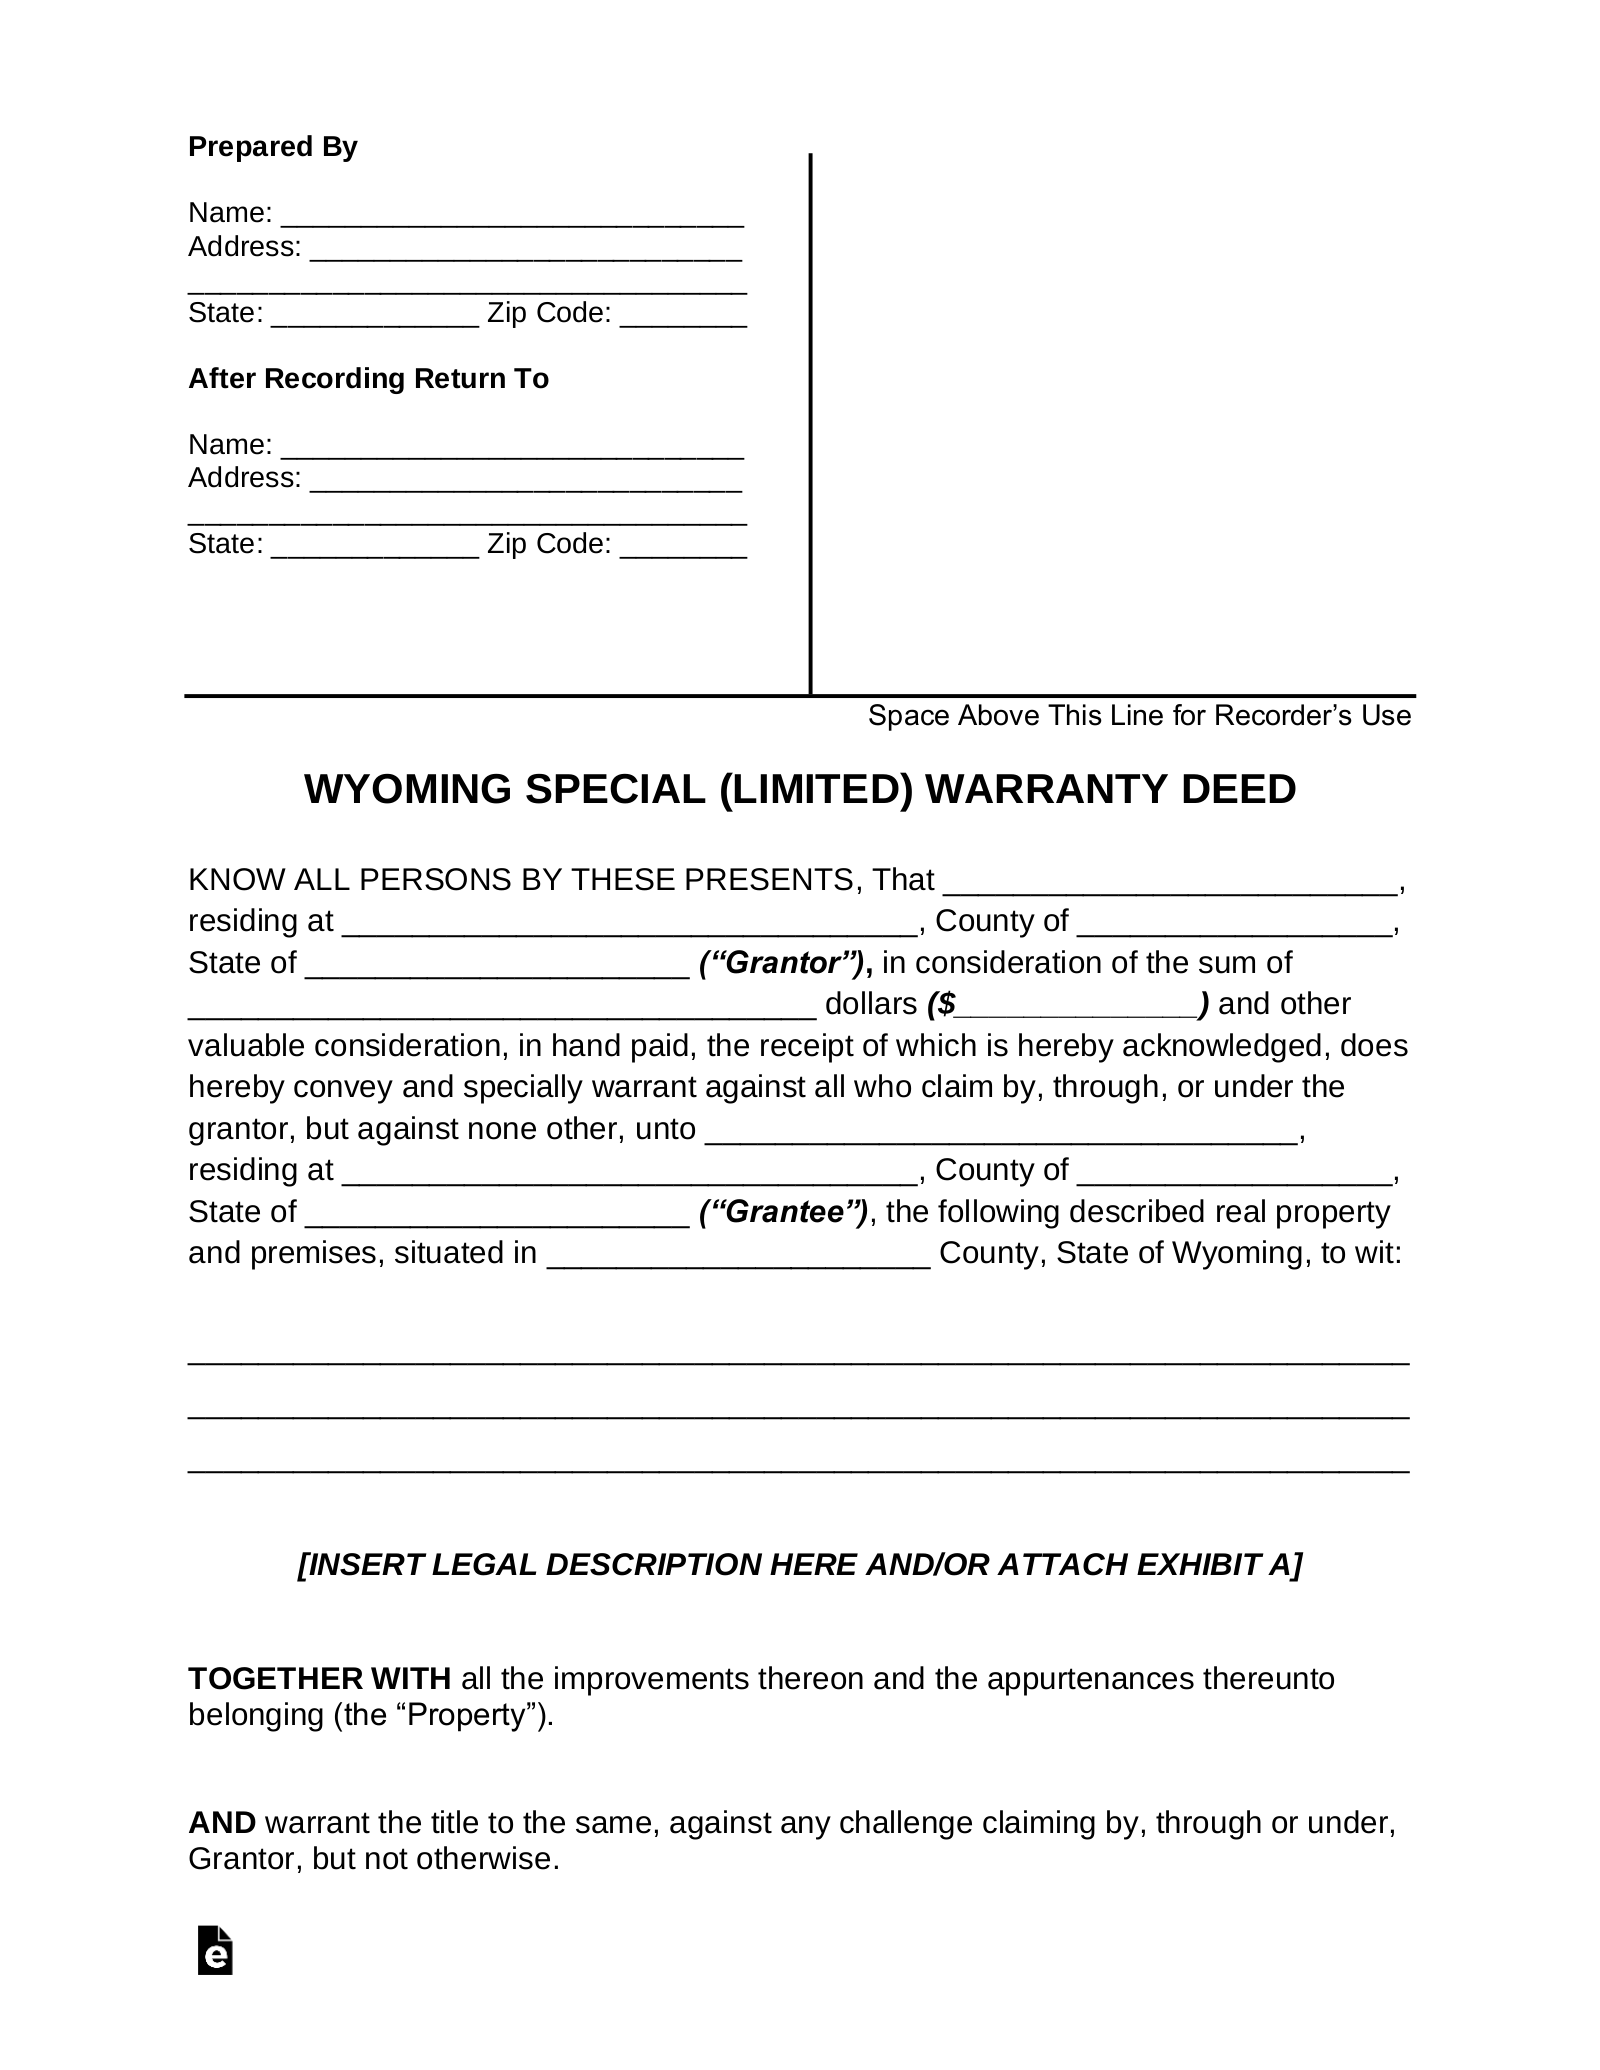 Wyoming Special Warranty Deed Form